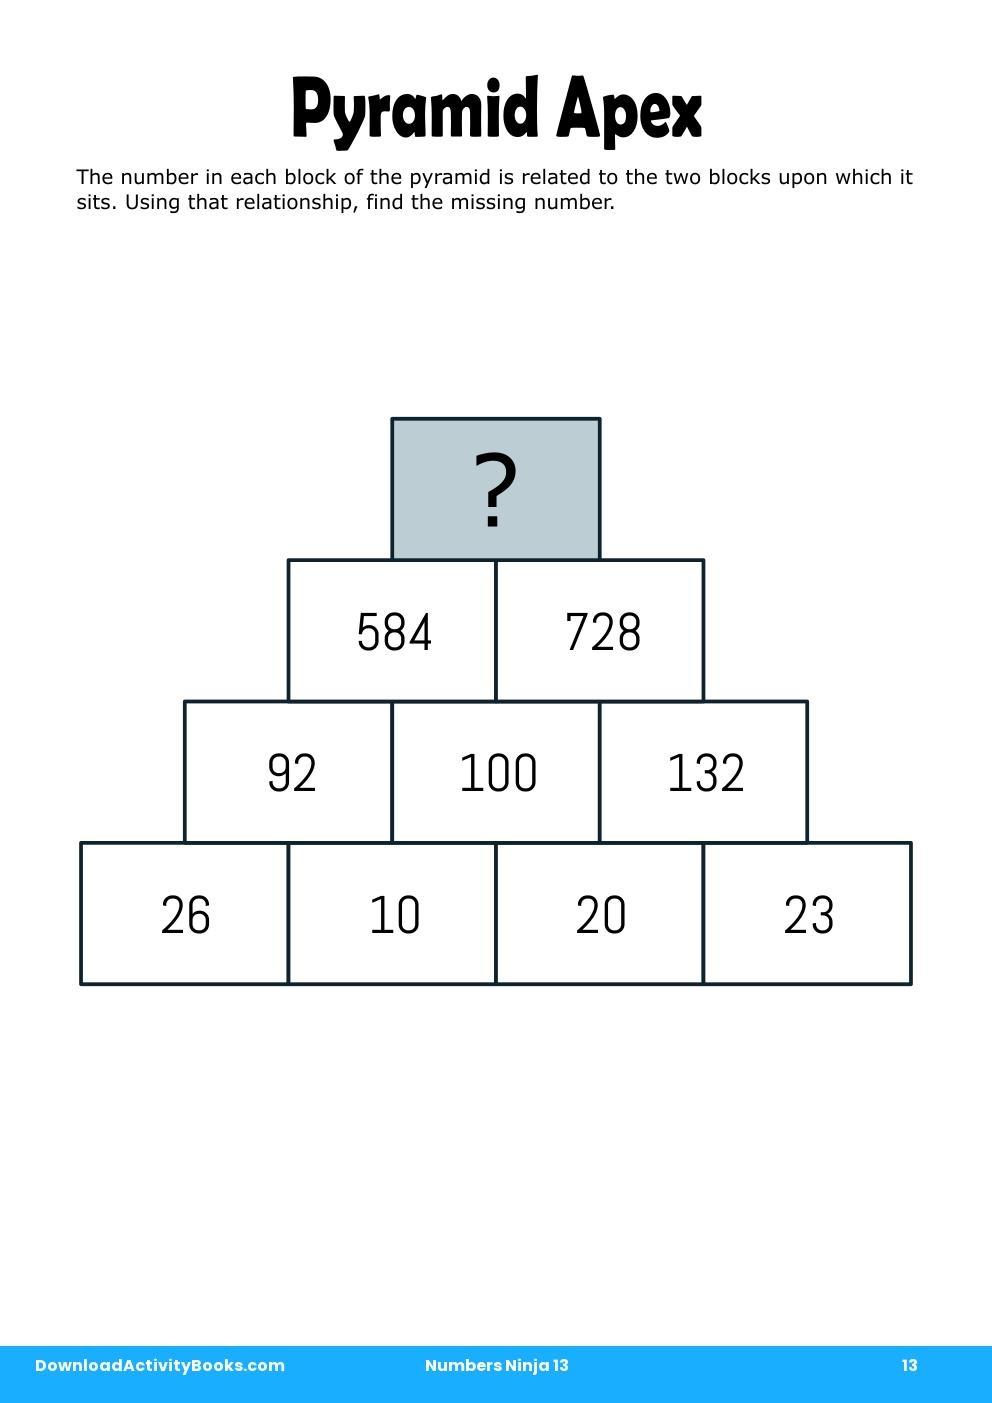 Pyramid Apex in Numbers Ninja 13